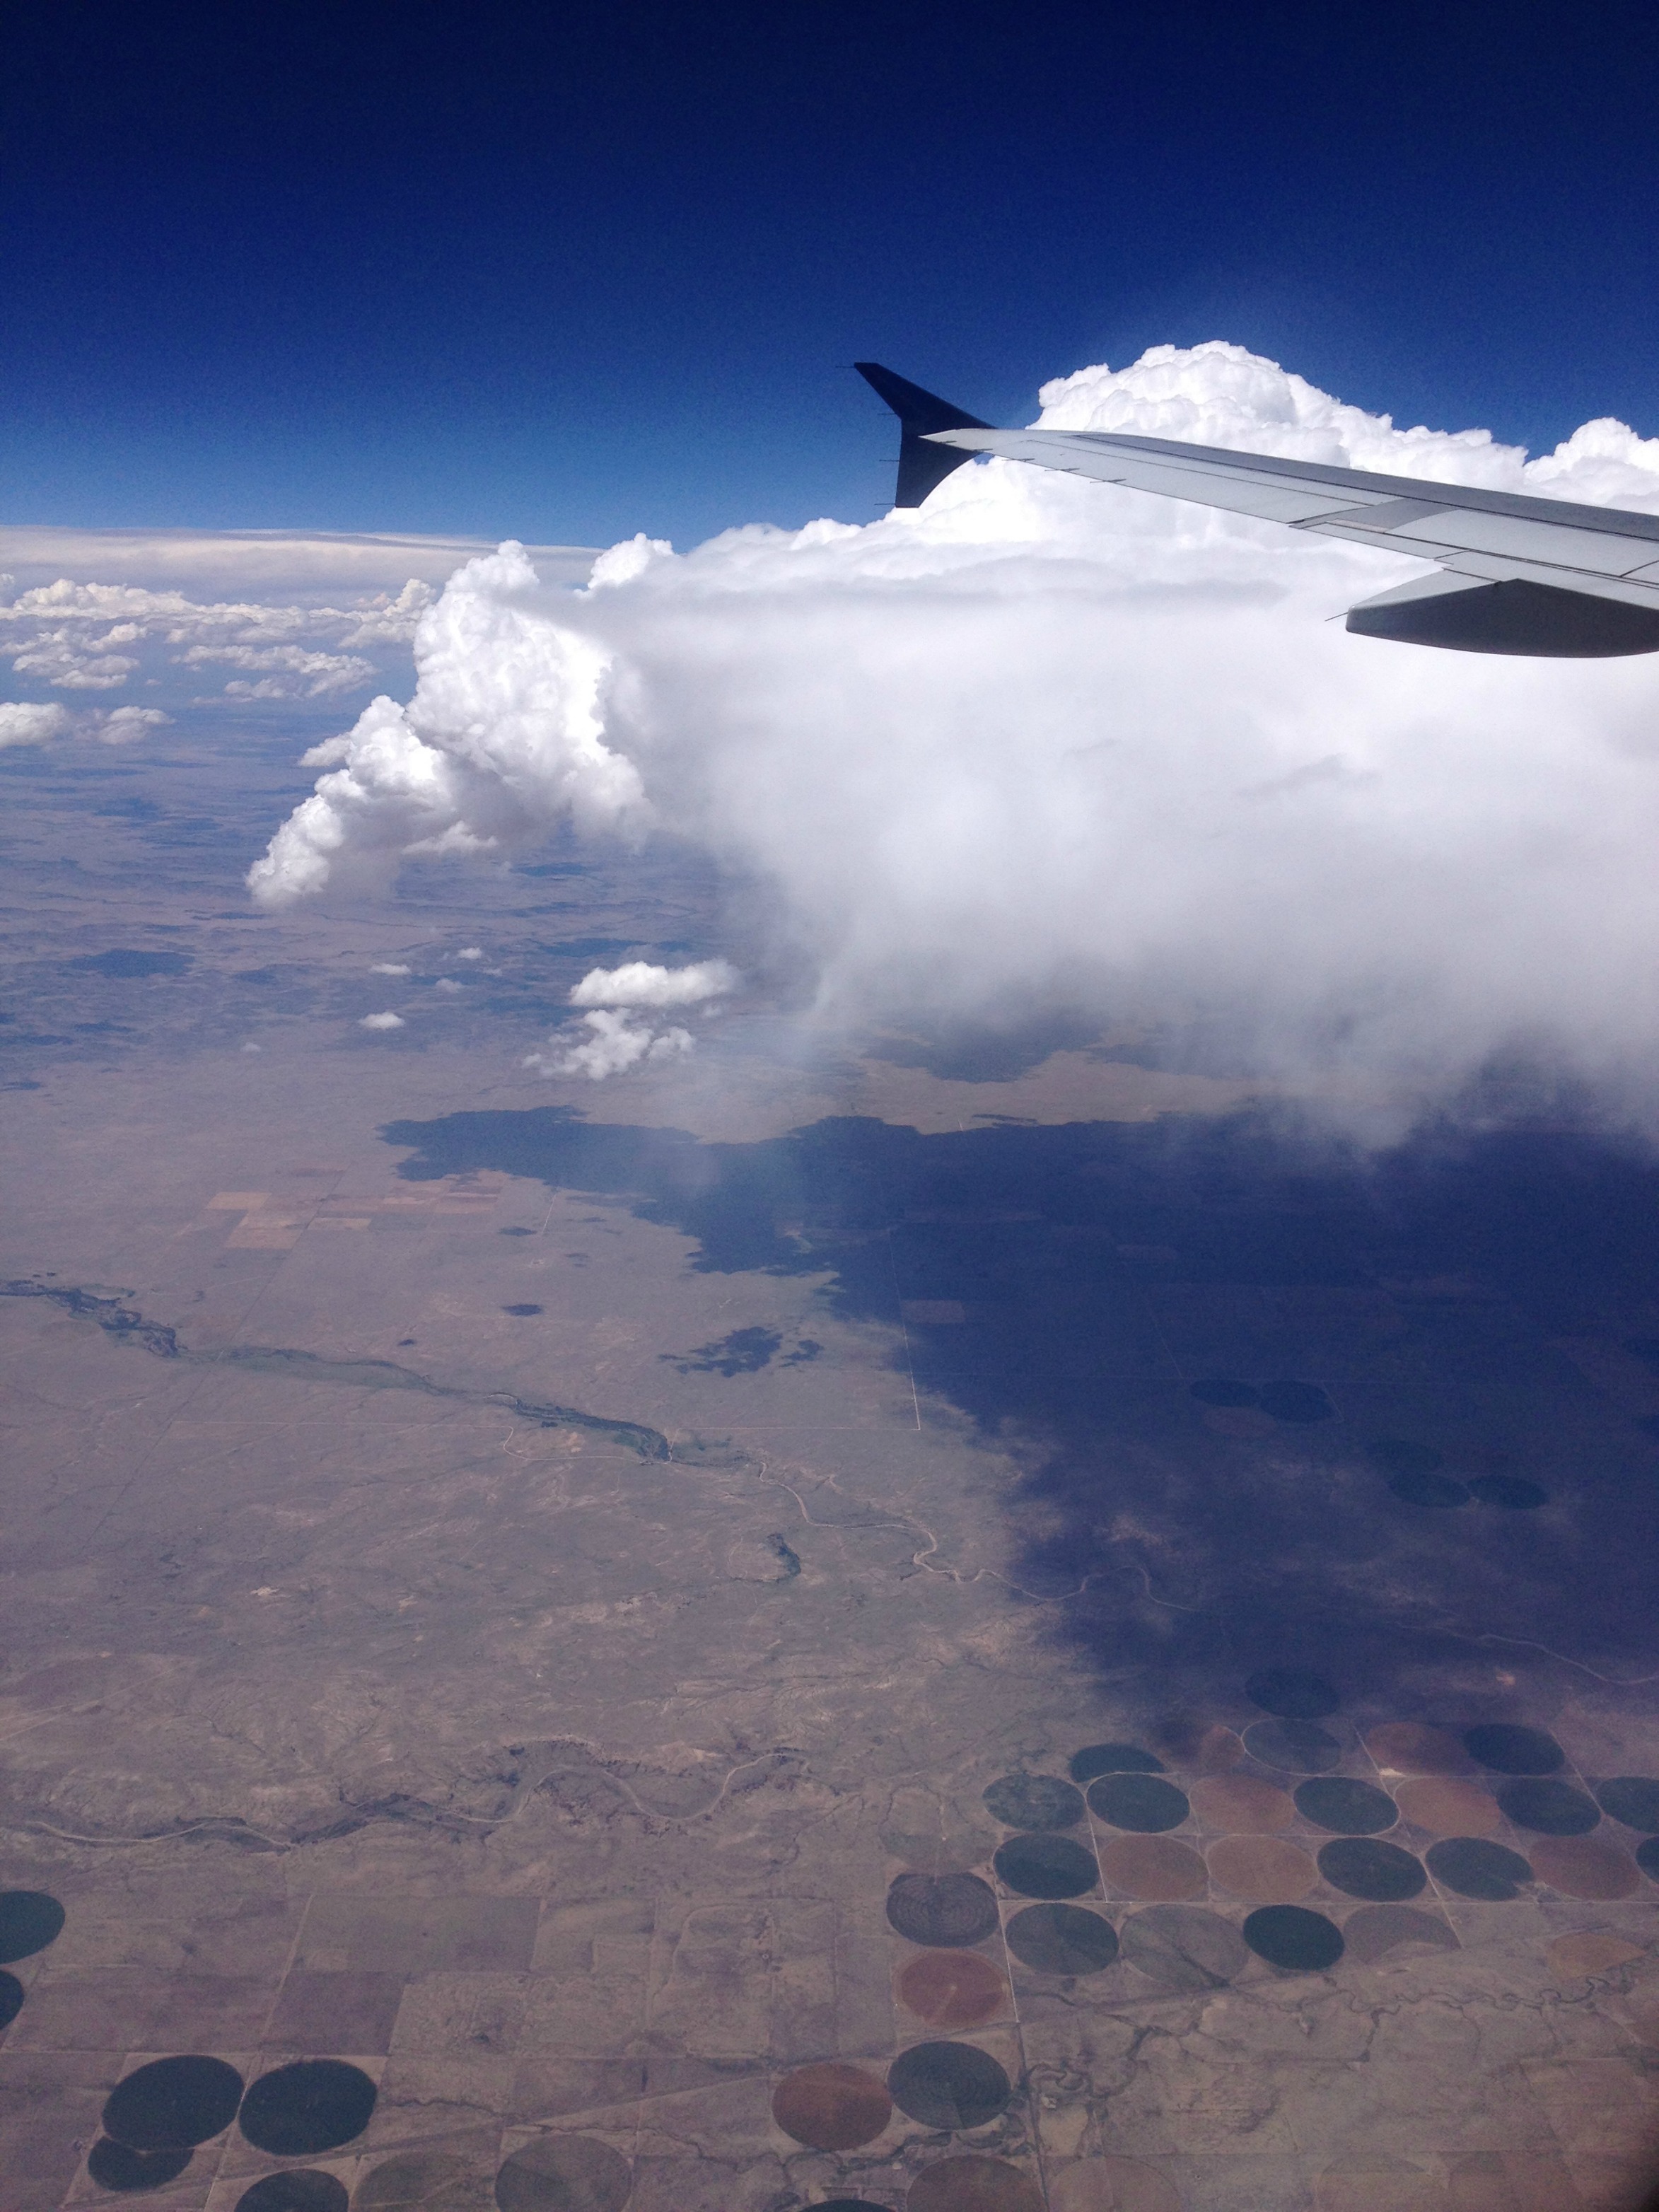 Cloud-June 2014-USA Midwest-photo by Joe McKendrick